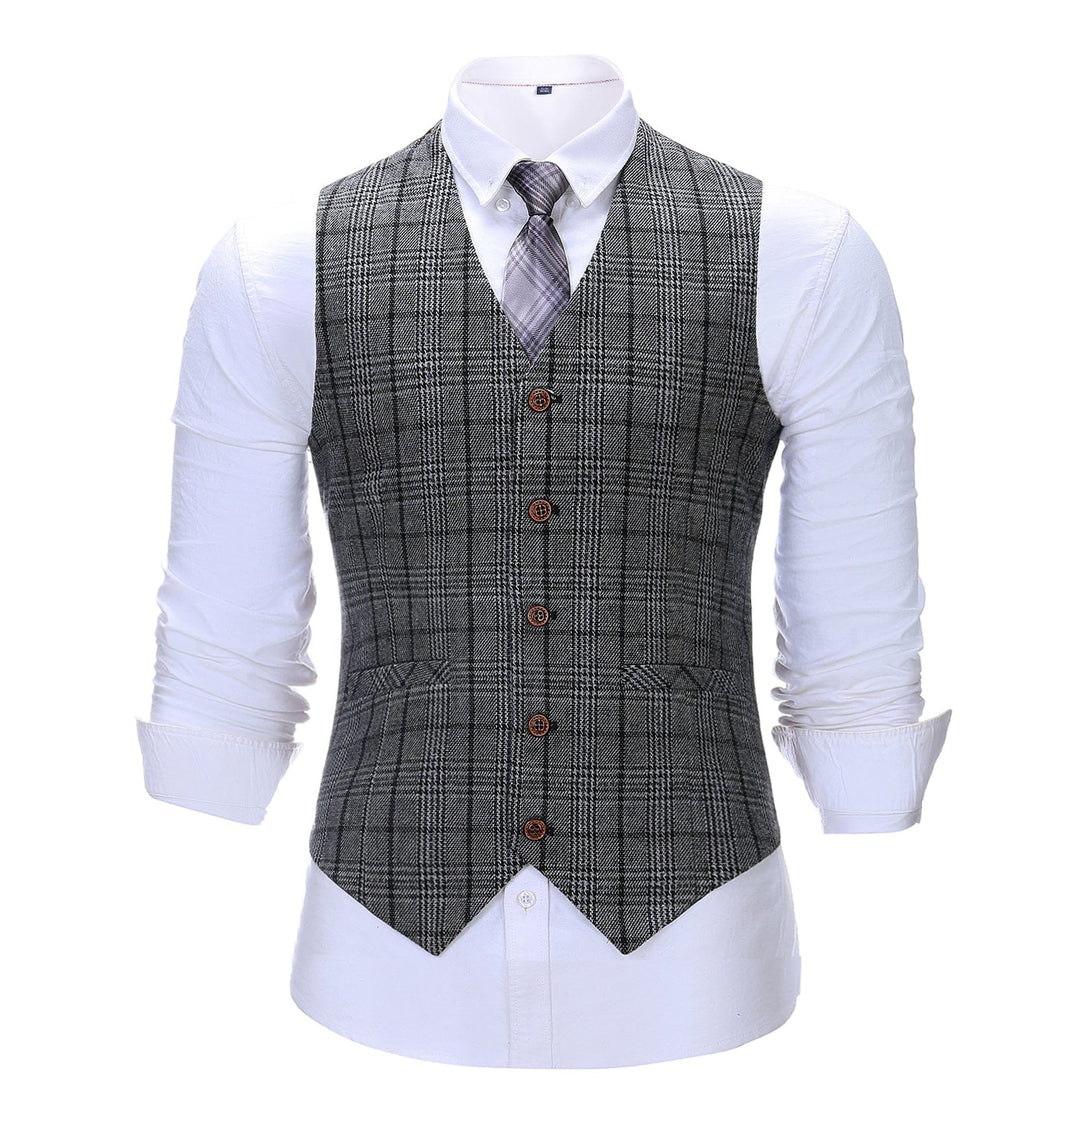 Formal Men's Suit Vest Dark Grey Plaid V Neck Waistcoat mens event wear